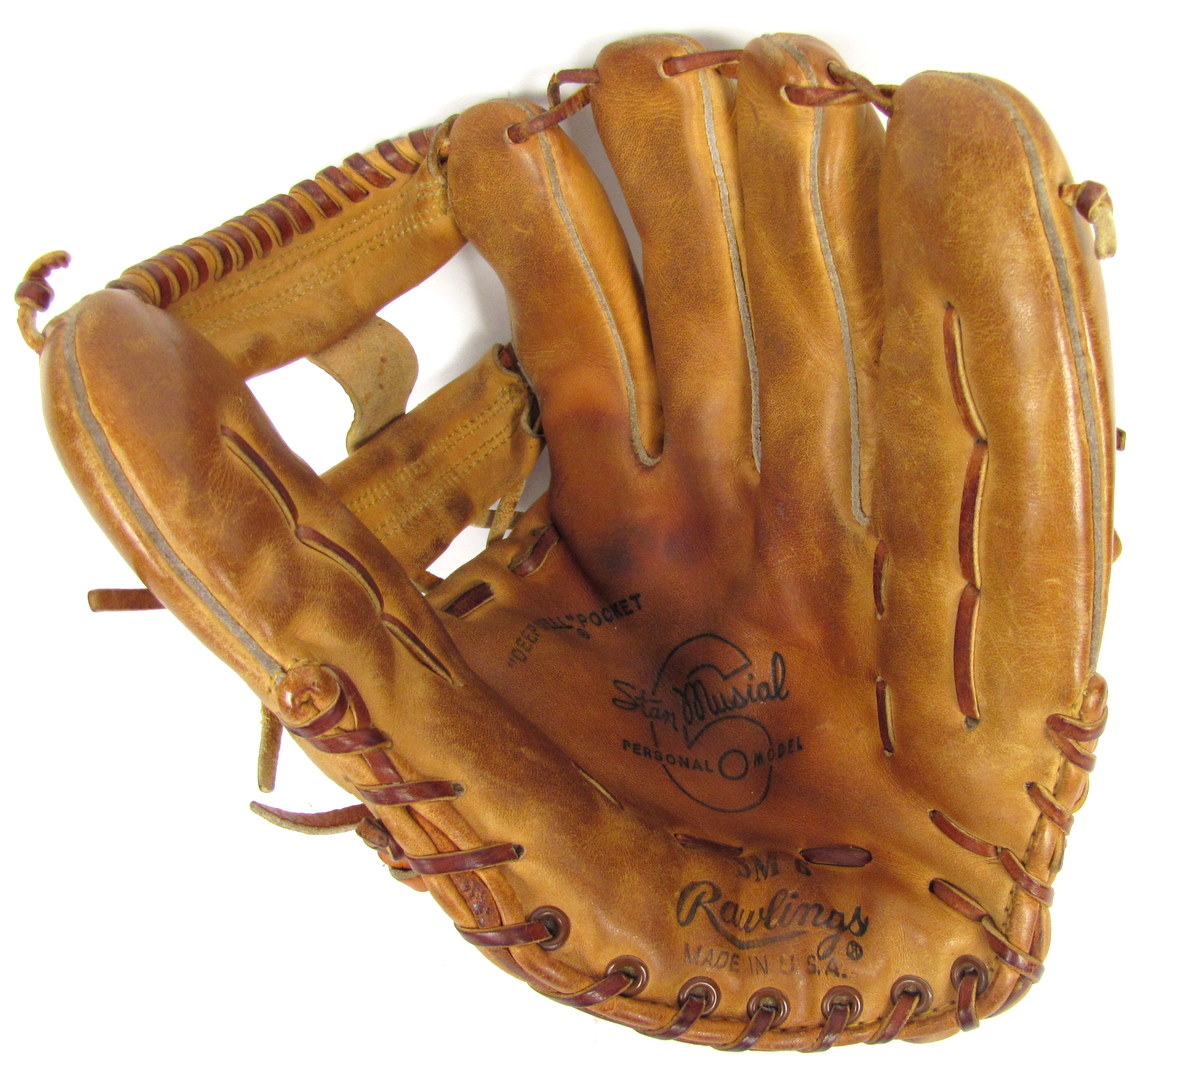 old baseball mitts